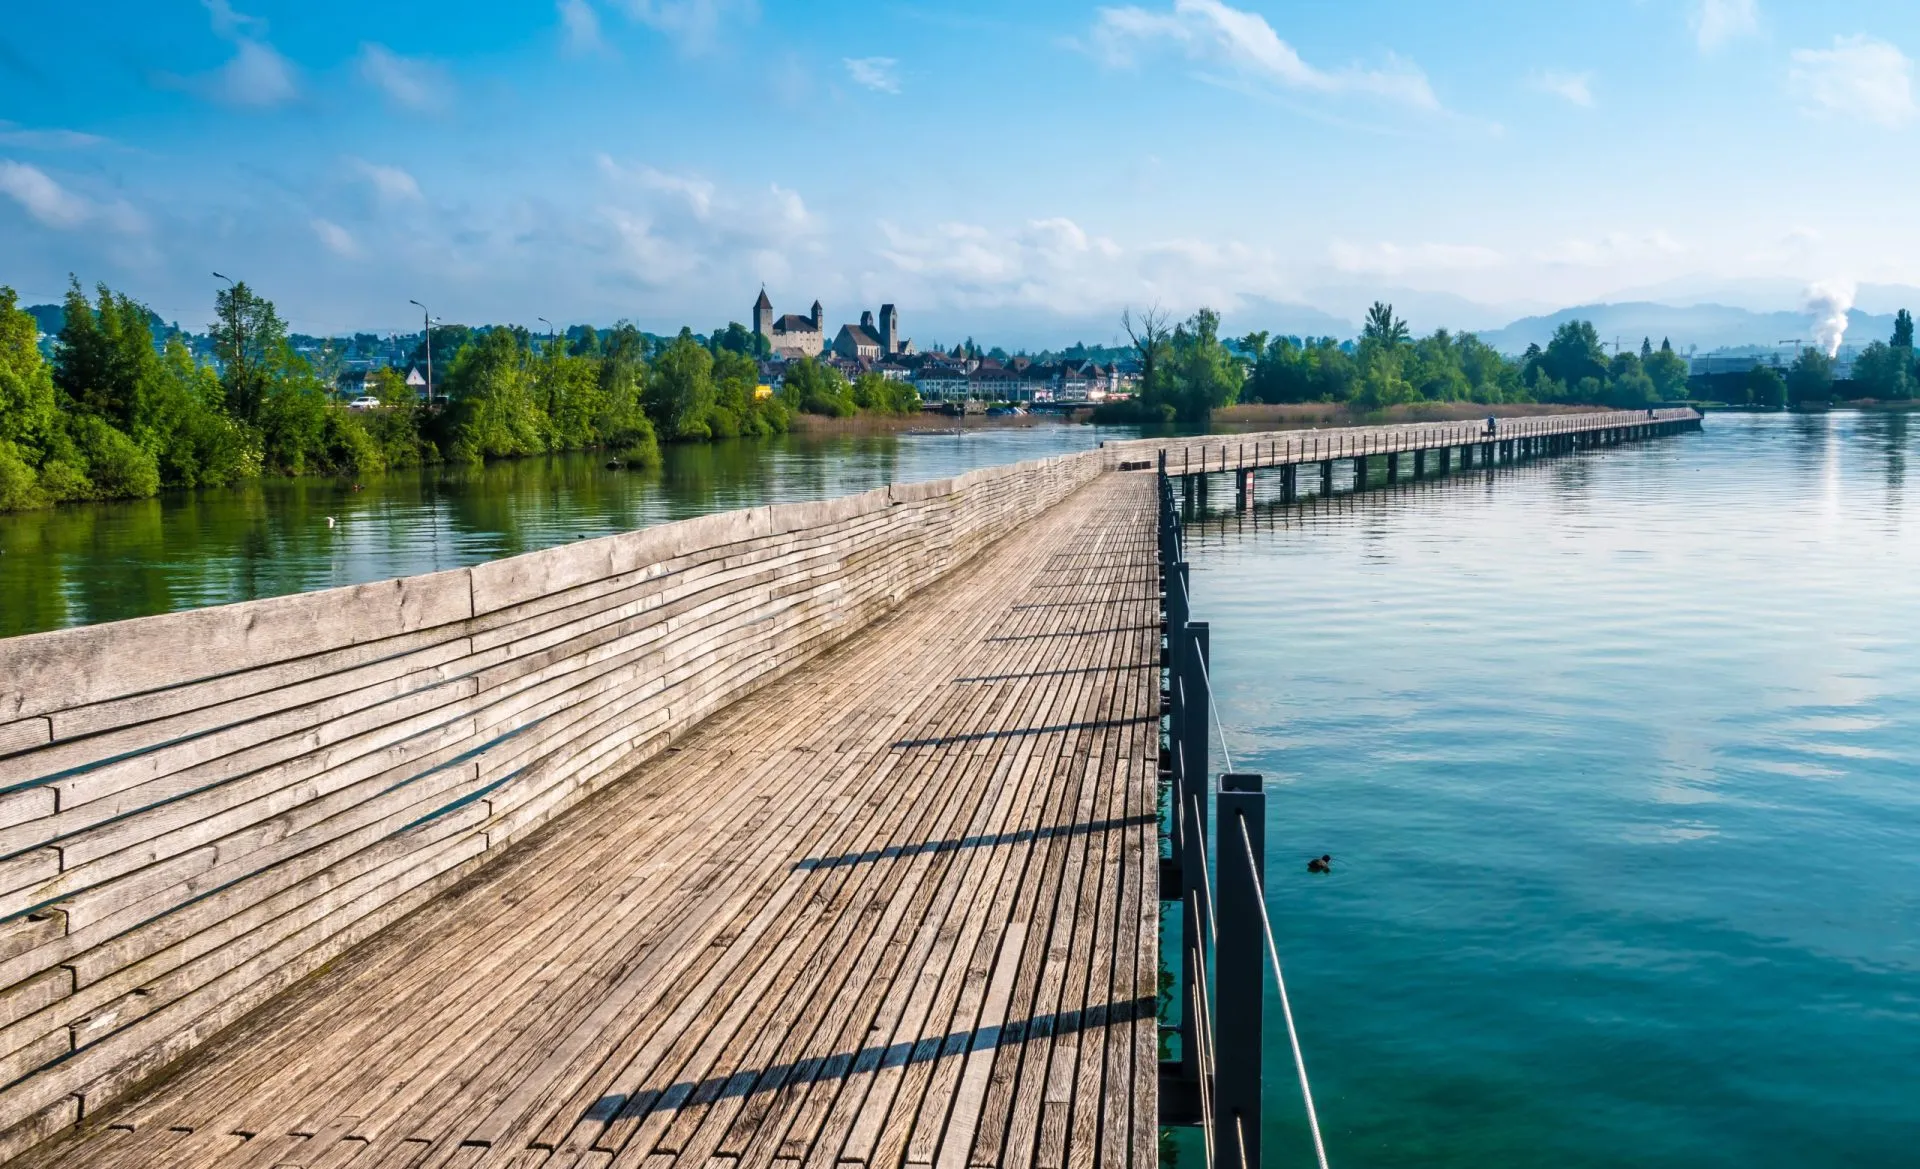 The holzsteg a wooden pedestrian bridge crossing the zurich lake